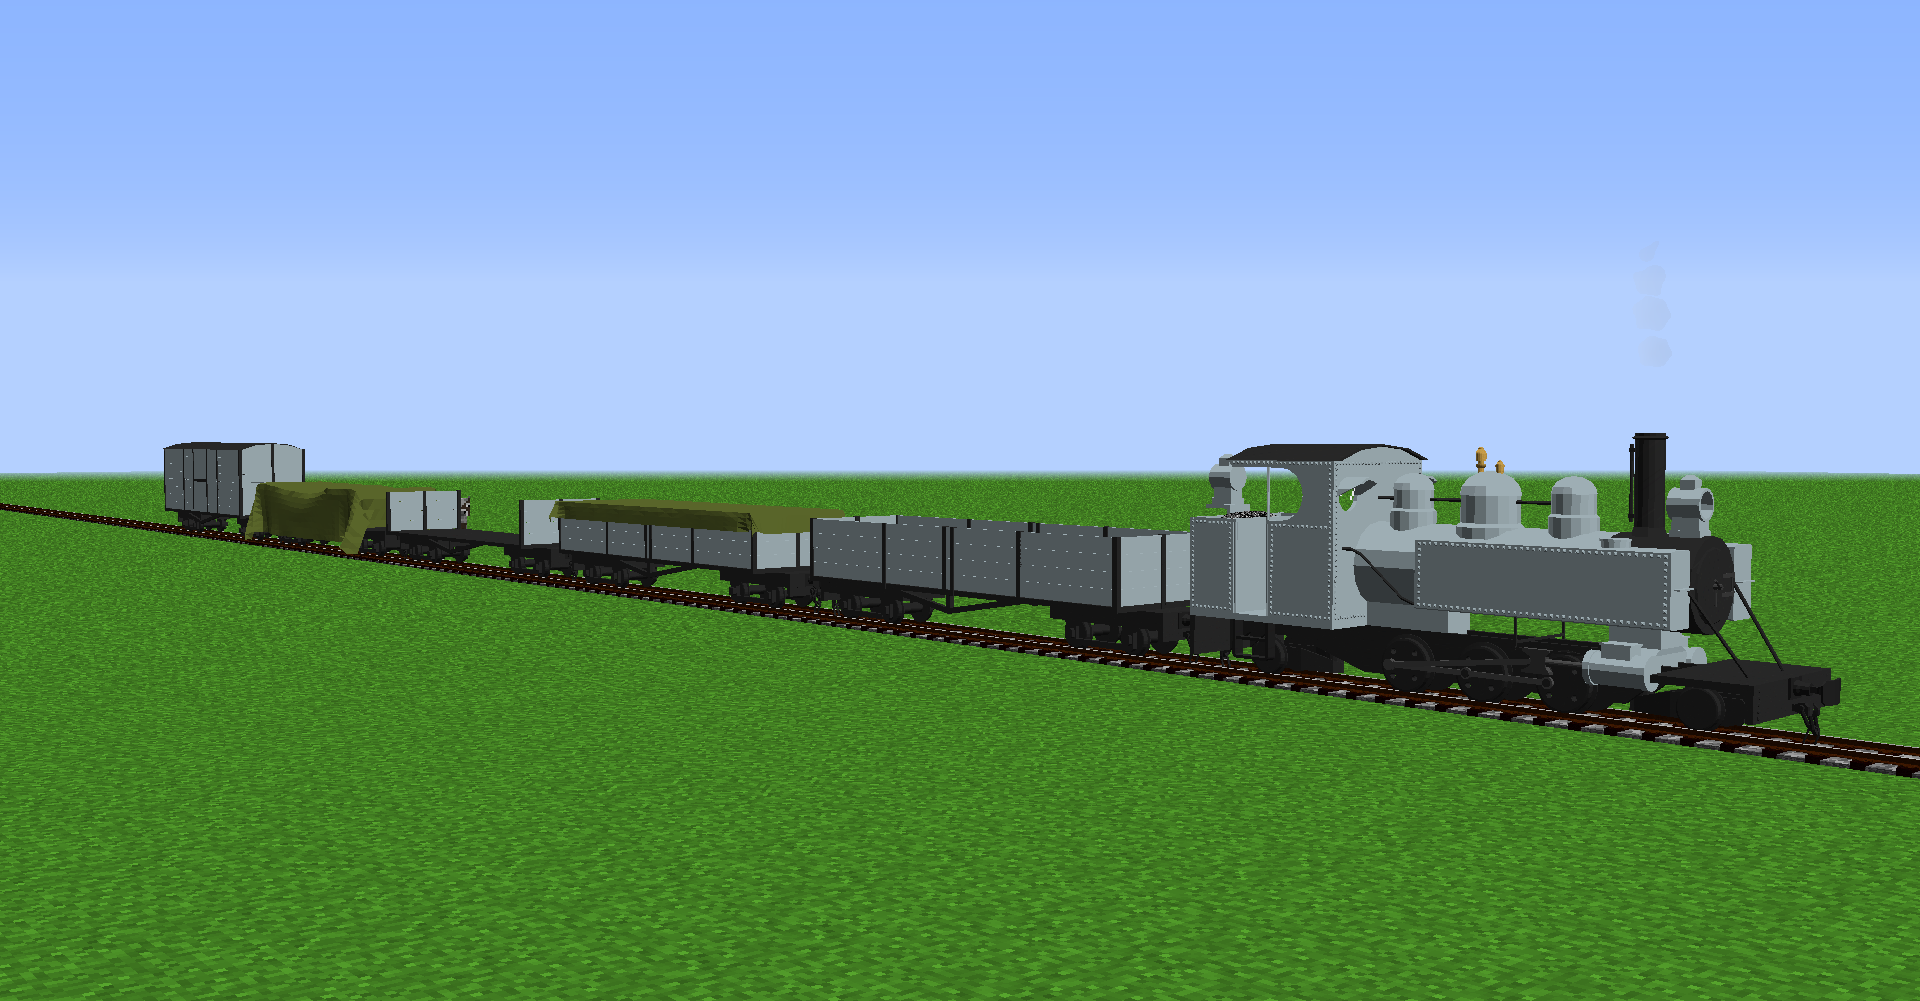 Steam n rails 1.20 1. Ww1 майнкрафт. Пак на Новотранс майнкрафт для immersive railroading. Minecraft Blockfront. Flans Mod 1.7.10 Ural.